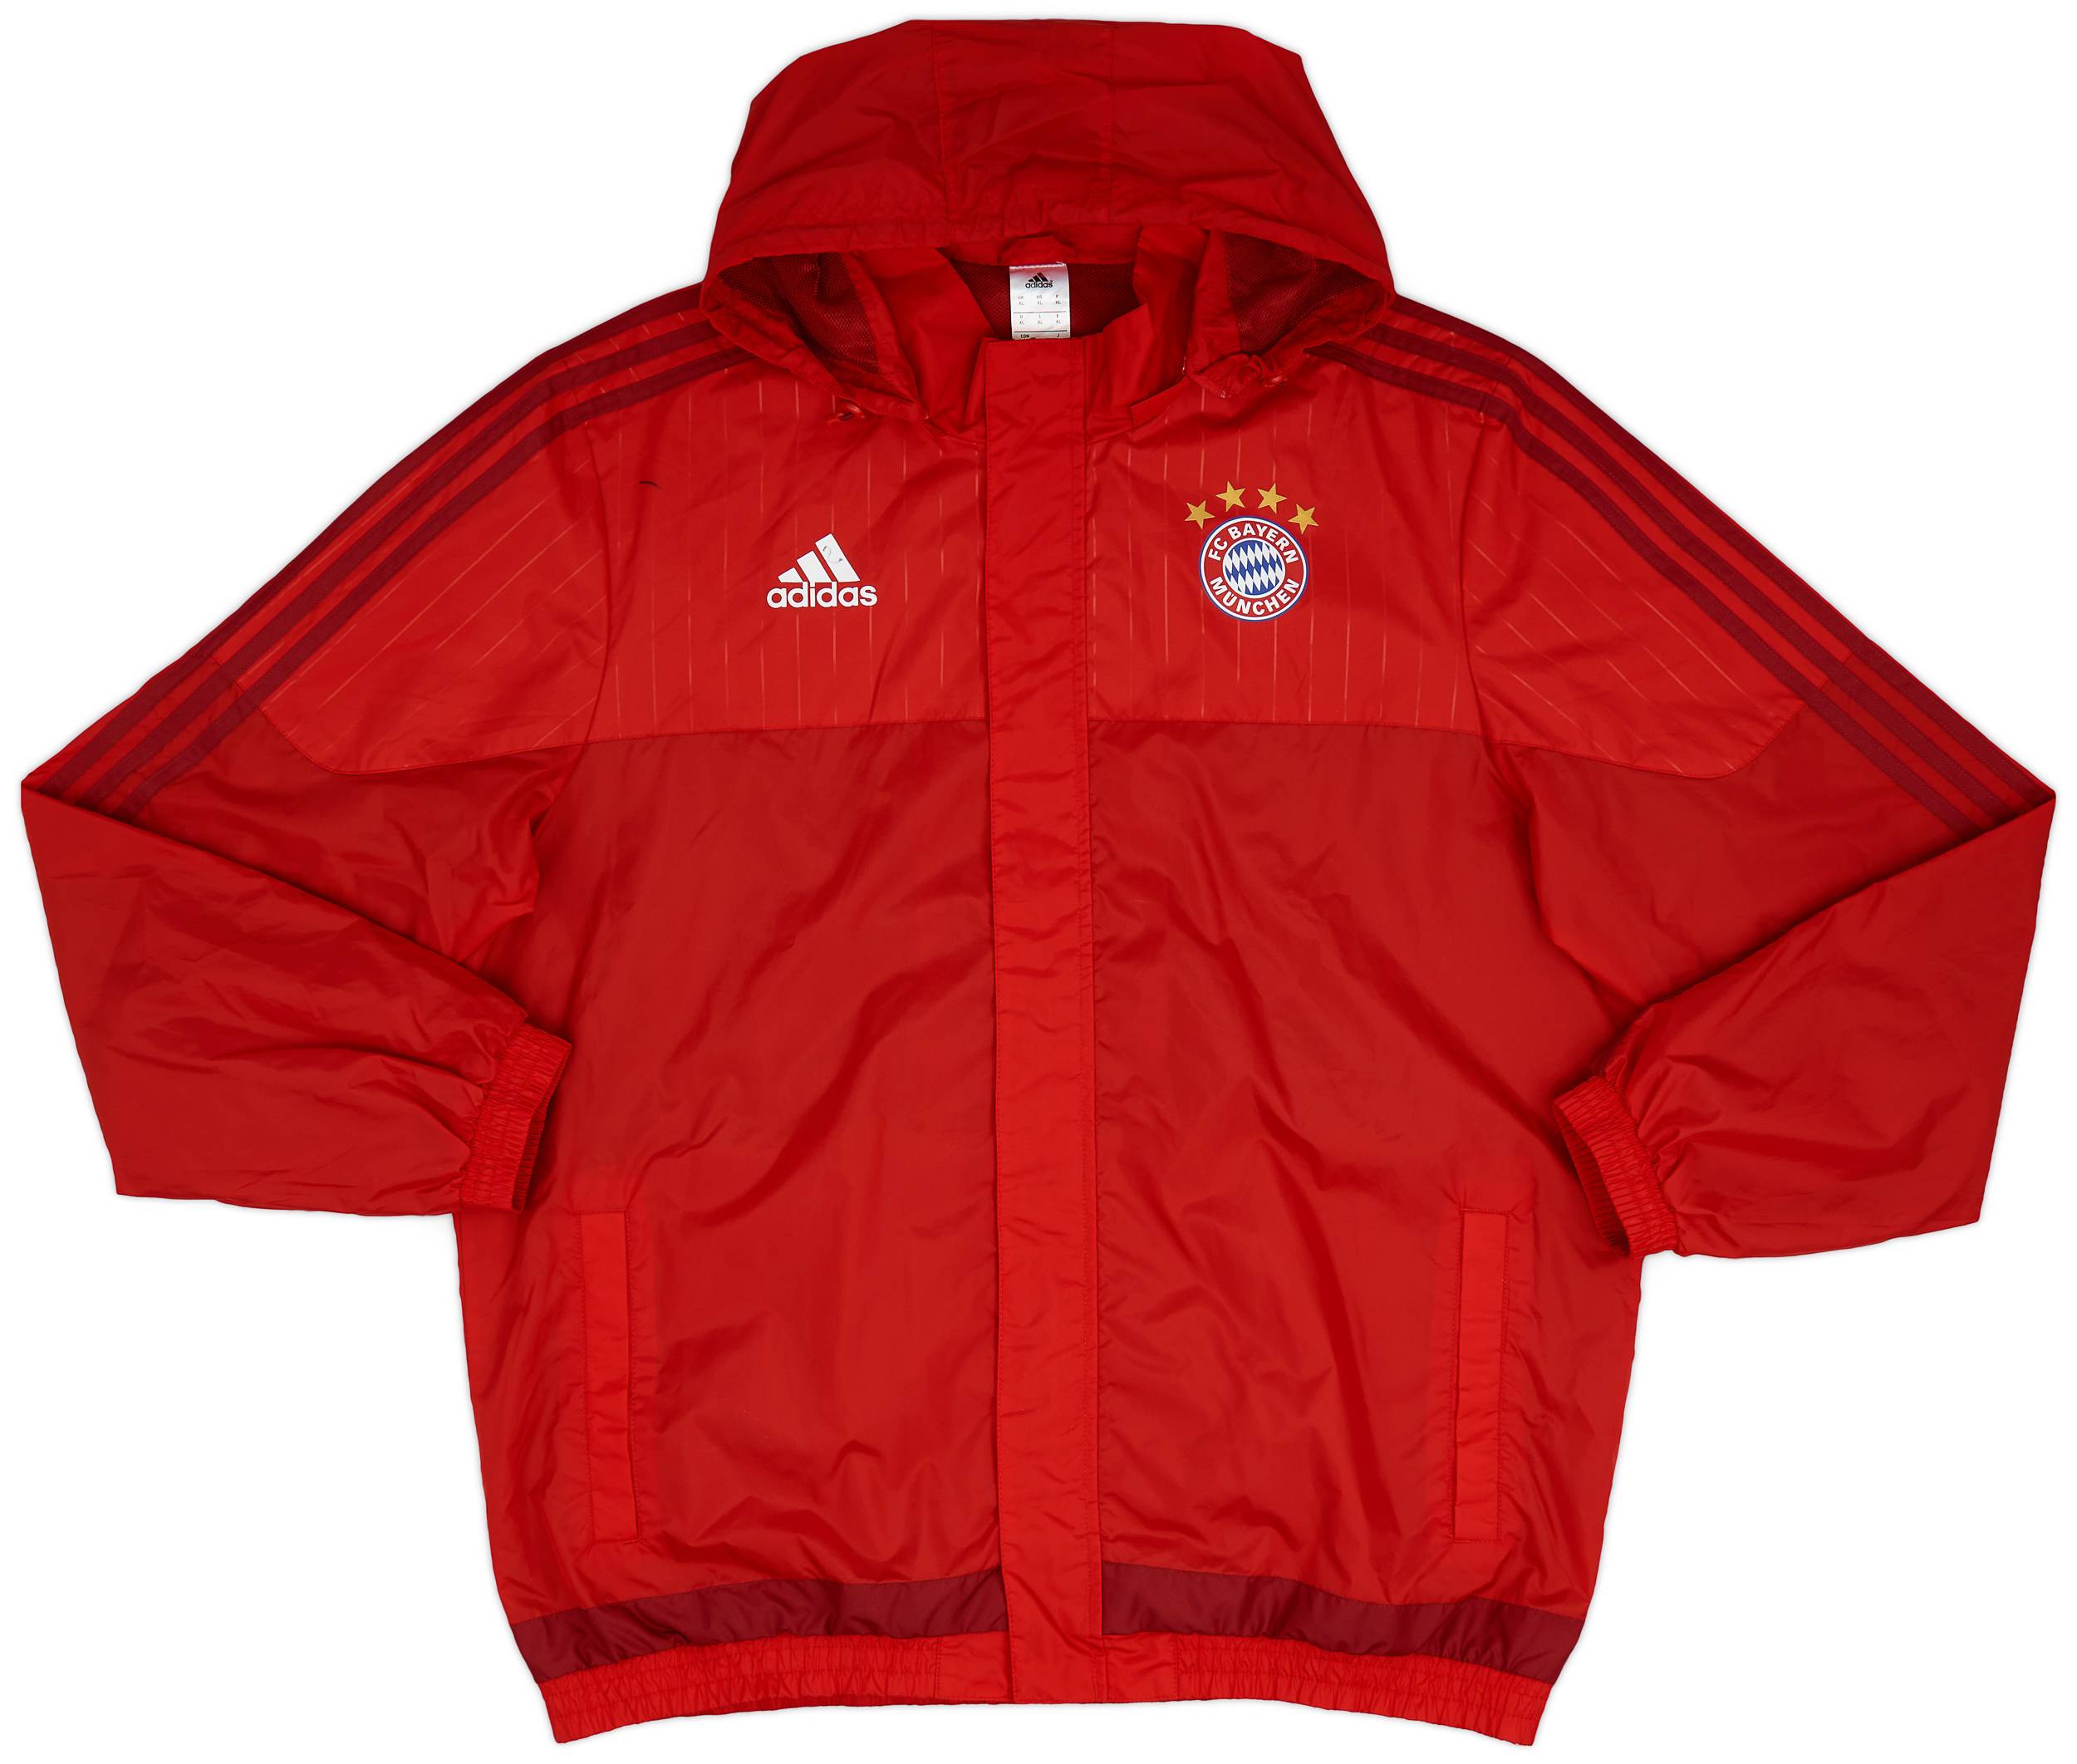 2015-16 Bayern Munich adidas Hooded Rain Jacket - 7/10 - (XL)